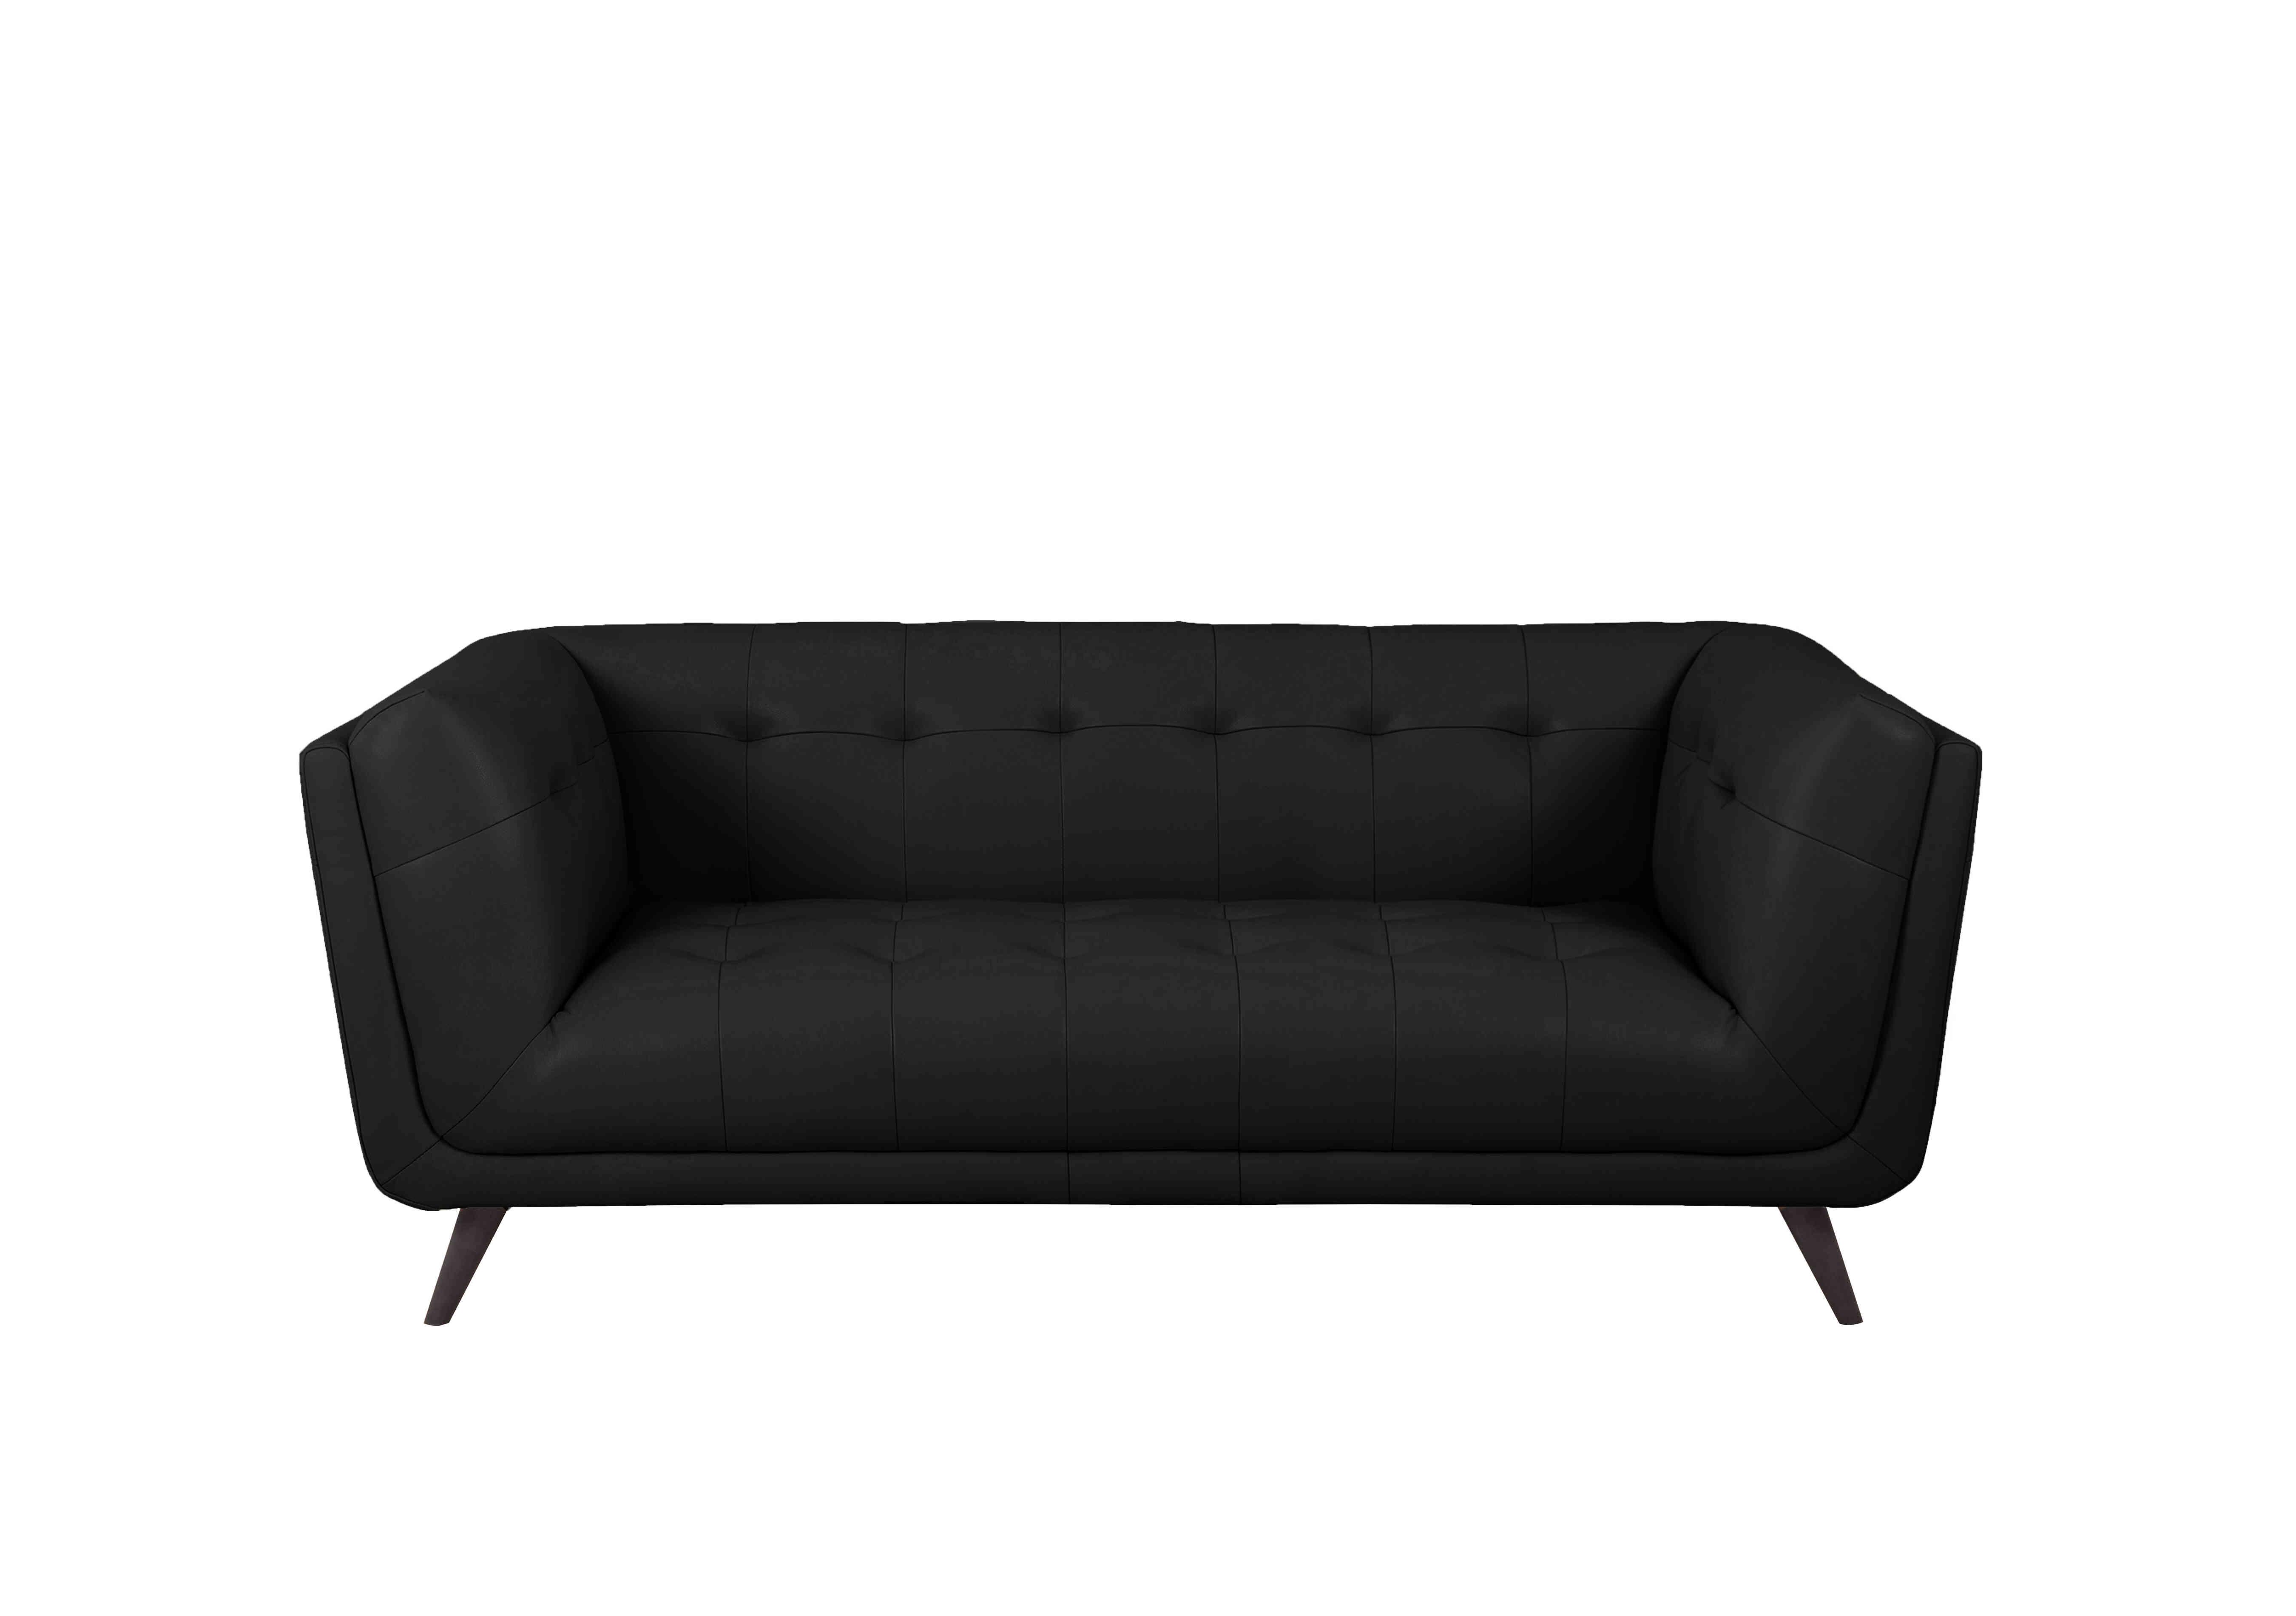 Rene Large 2 Seater Leather Sofa in Florida Black on Furniture Village